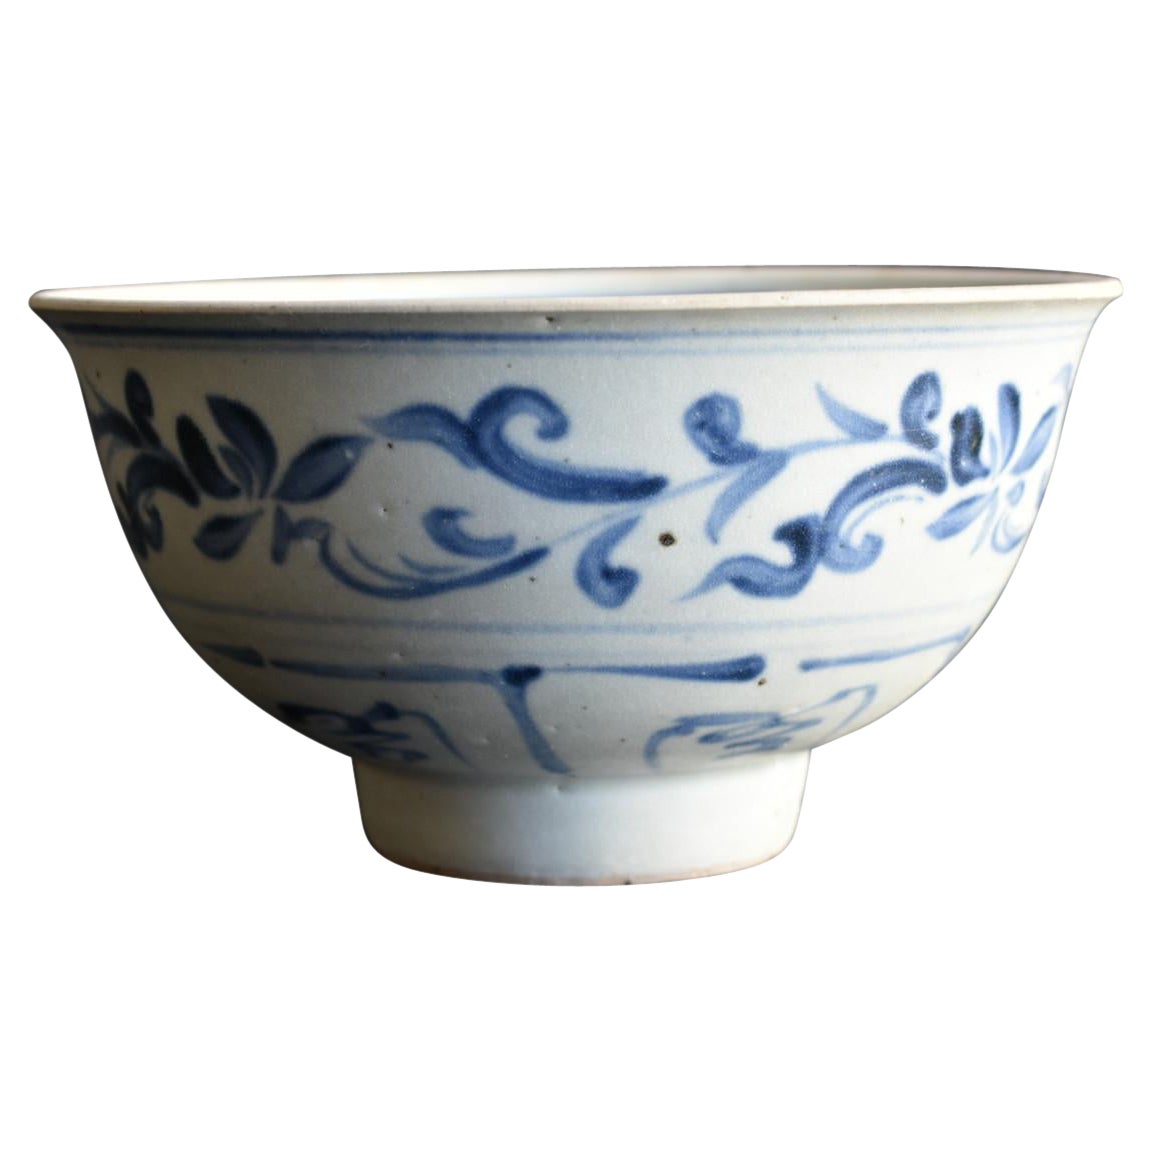 Vietnamese Antique Bowl 16th Century / "Annan-chawan" / Southeast Asian Pottery